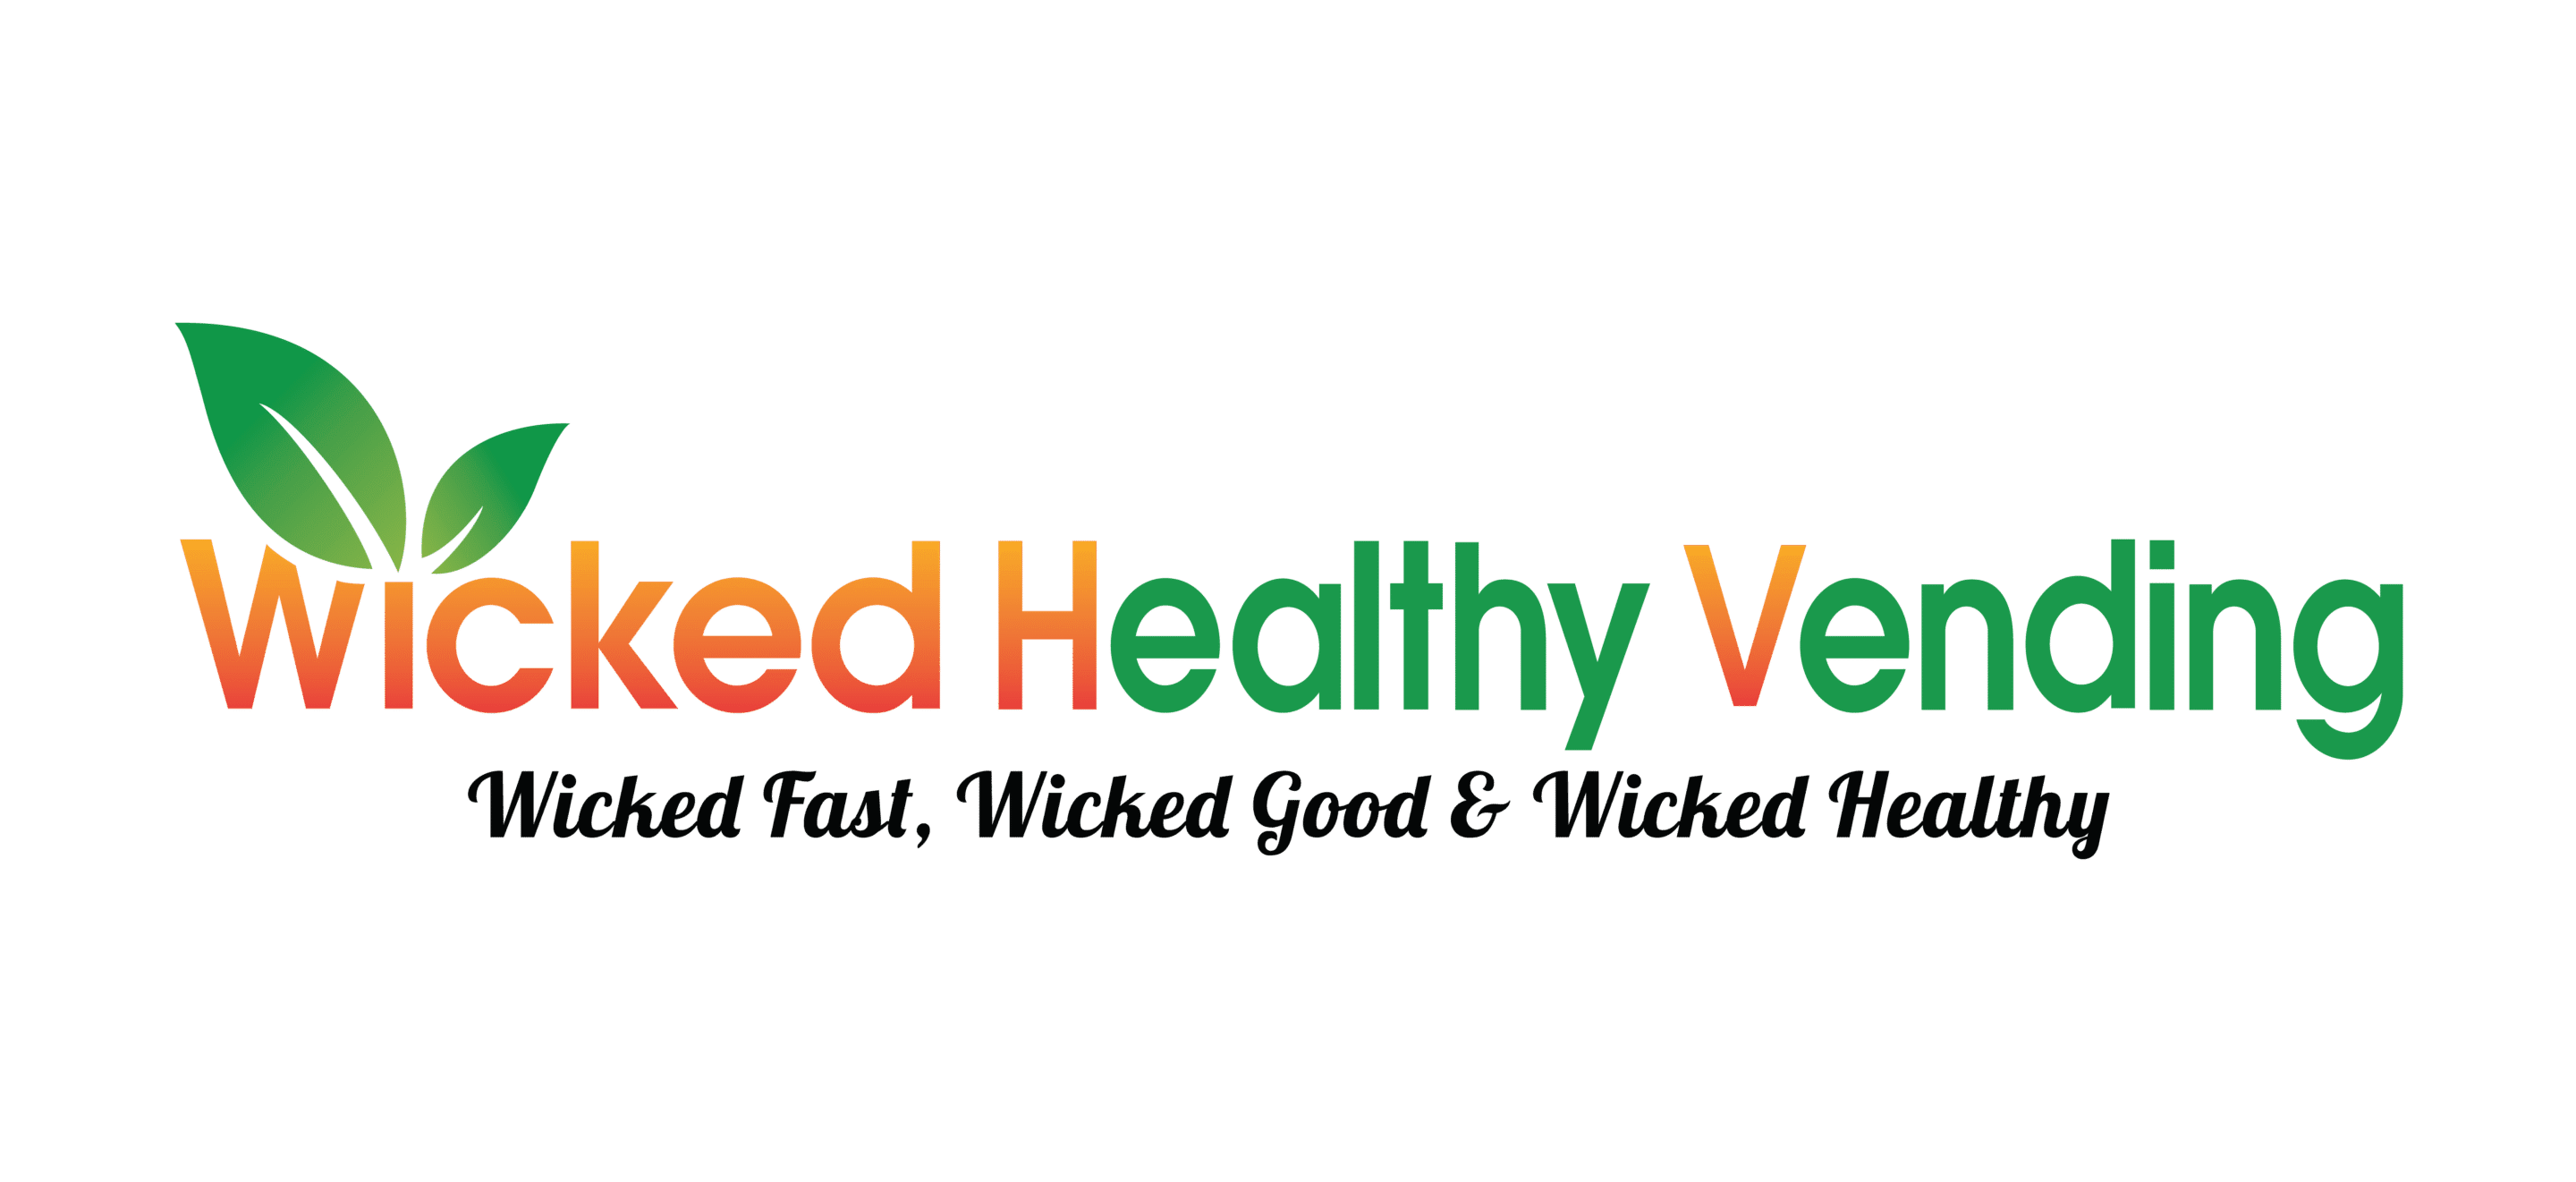 Wicked Healthy Vending horizontal logo